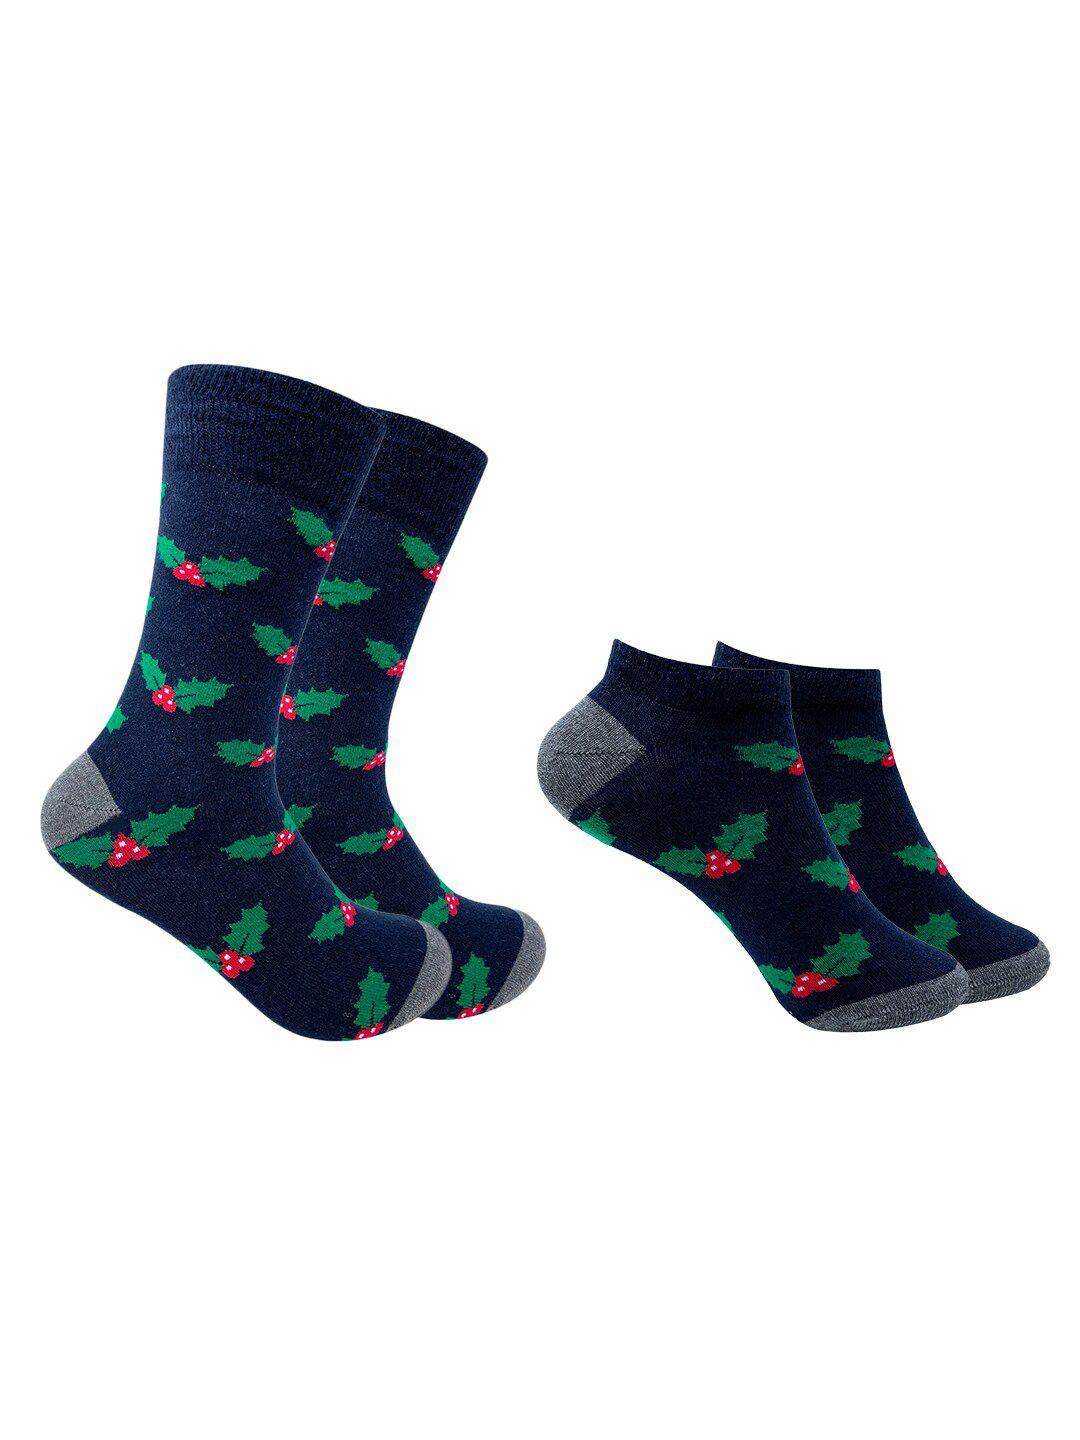 mint-&-oak-pack-of-2-navy-blue-patterned-ankle-&-calf-length-socks